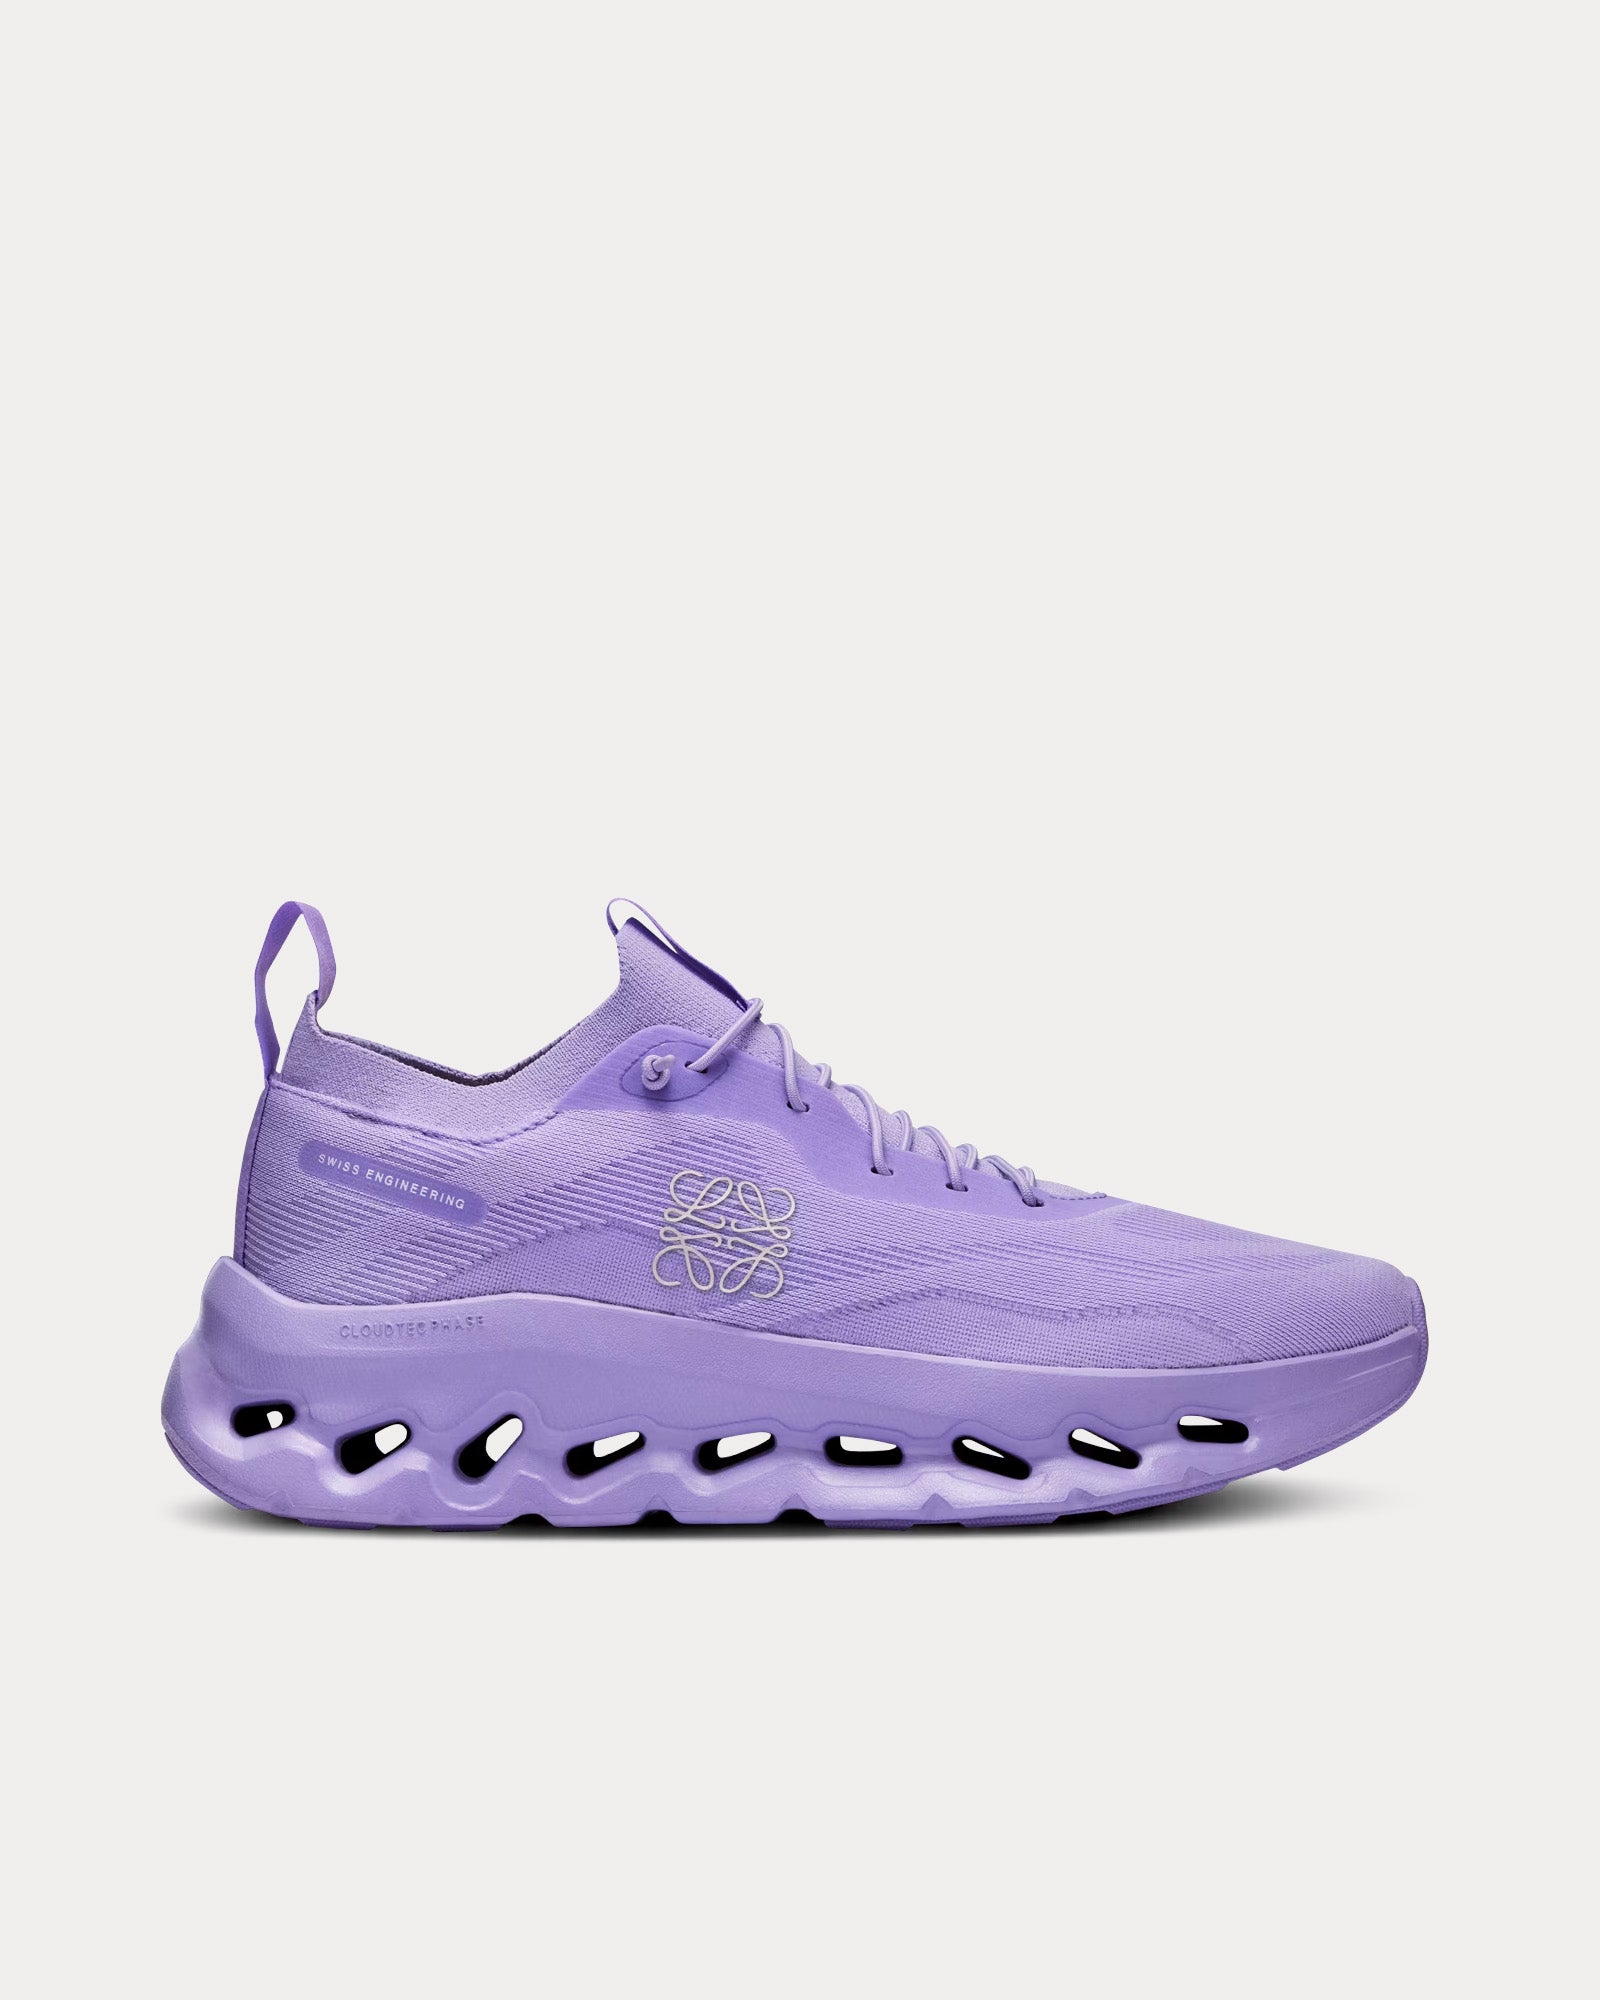 Cloudtilt Purple Rose Low Top Sneakers